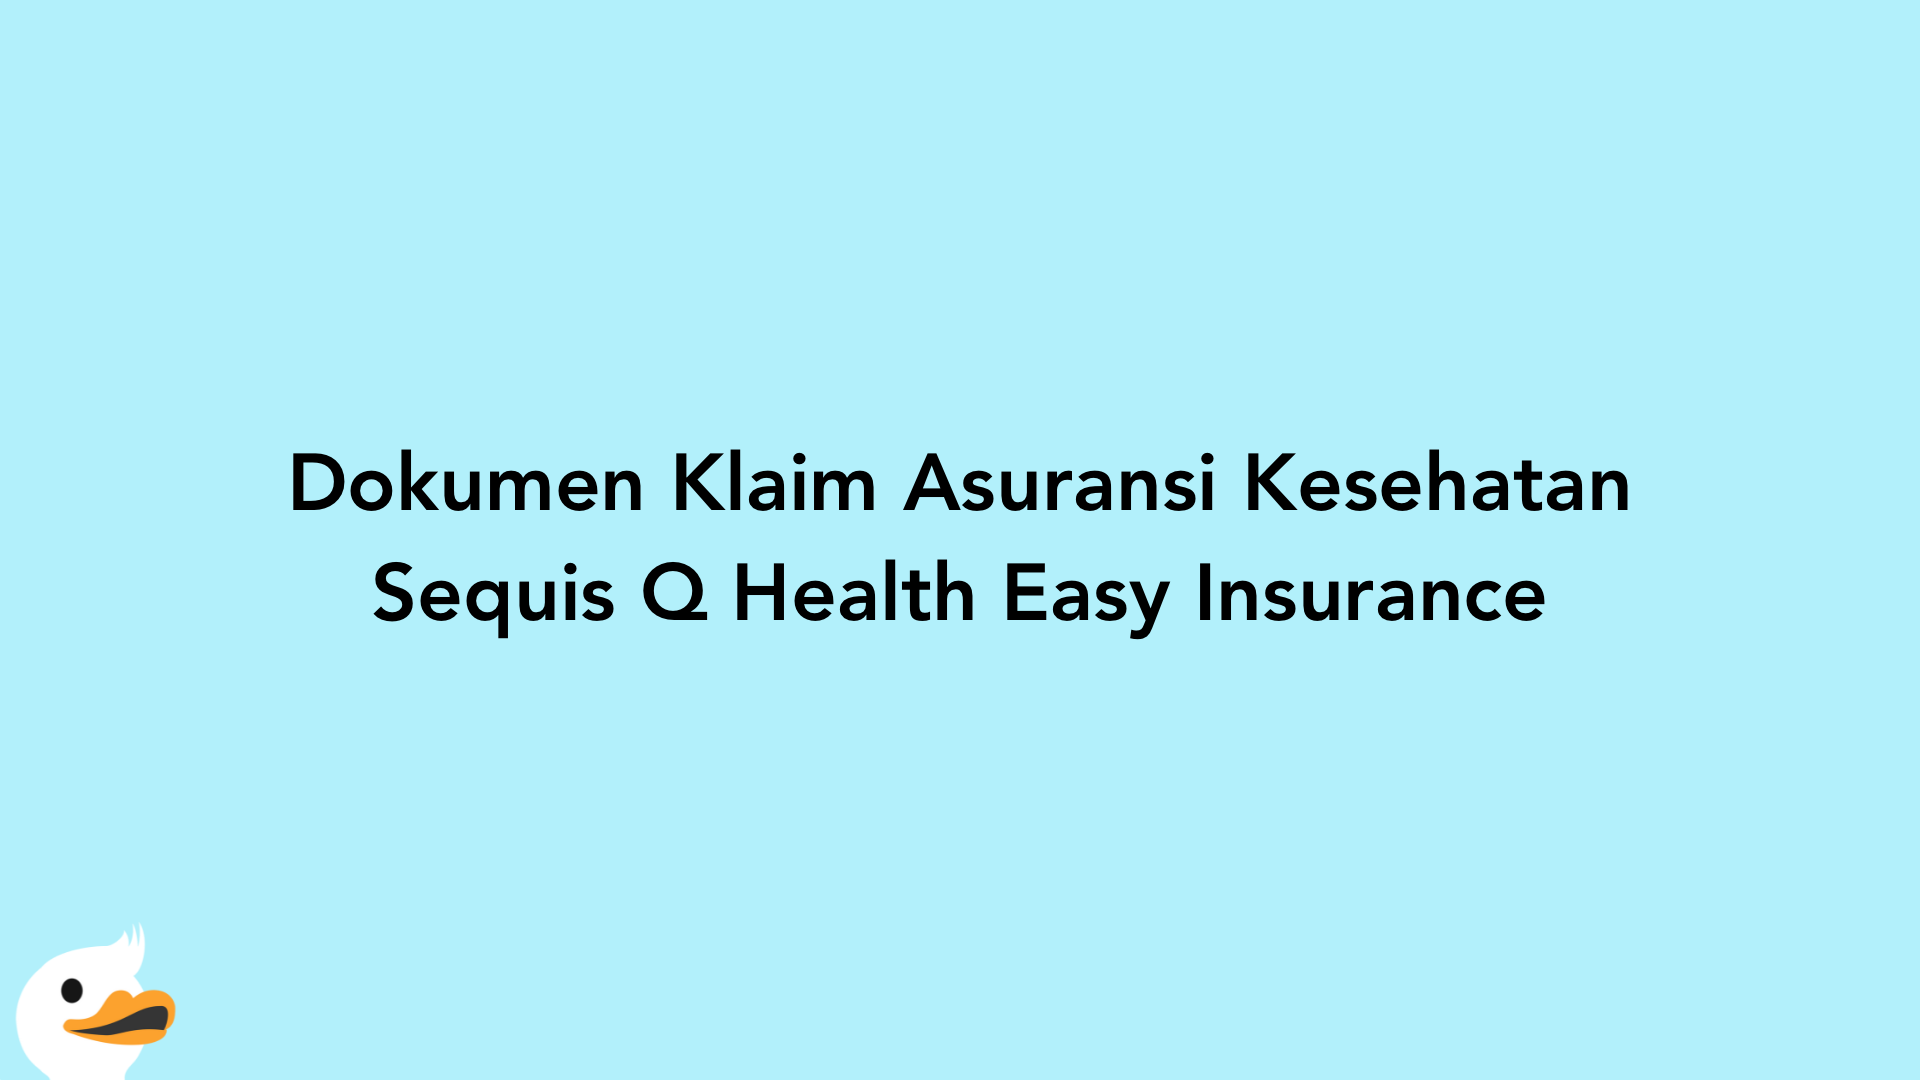 Dokumen Klaim Asuransi Kesehatan Sequis Q Health Easy Insurance